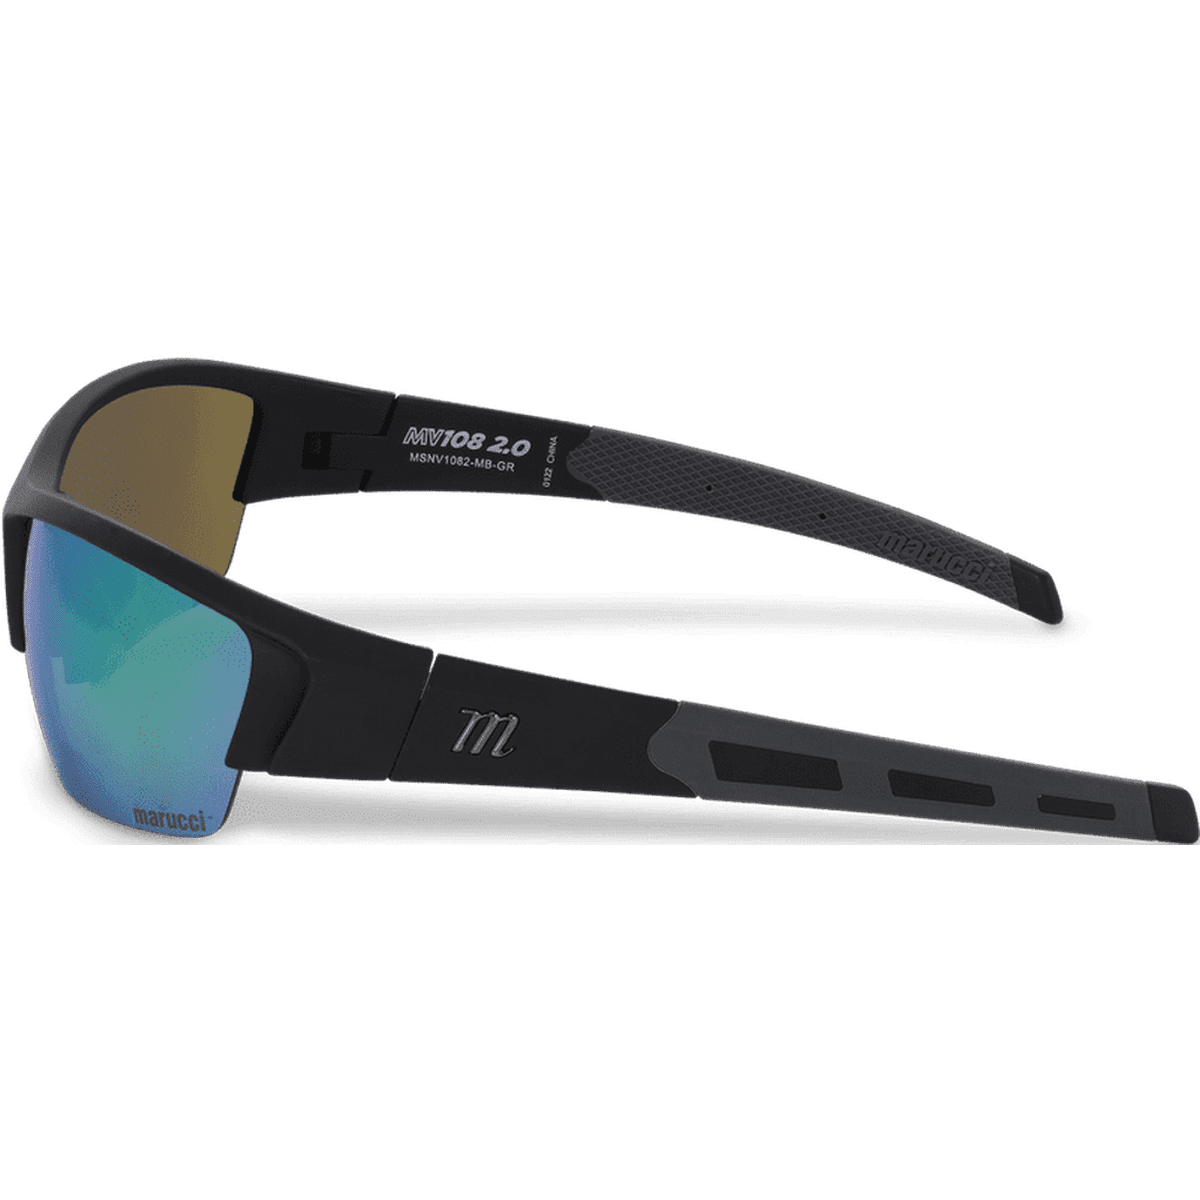 Marucci MV108 2.0 Performance Sunglasses - Matte Black Green - HIT a Double